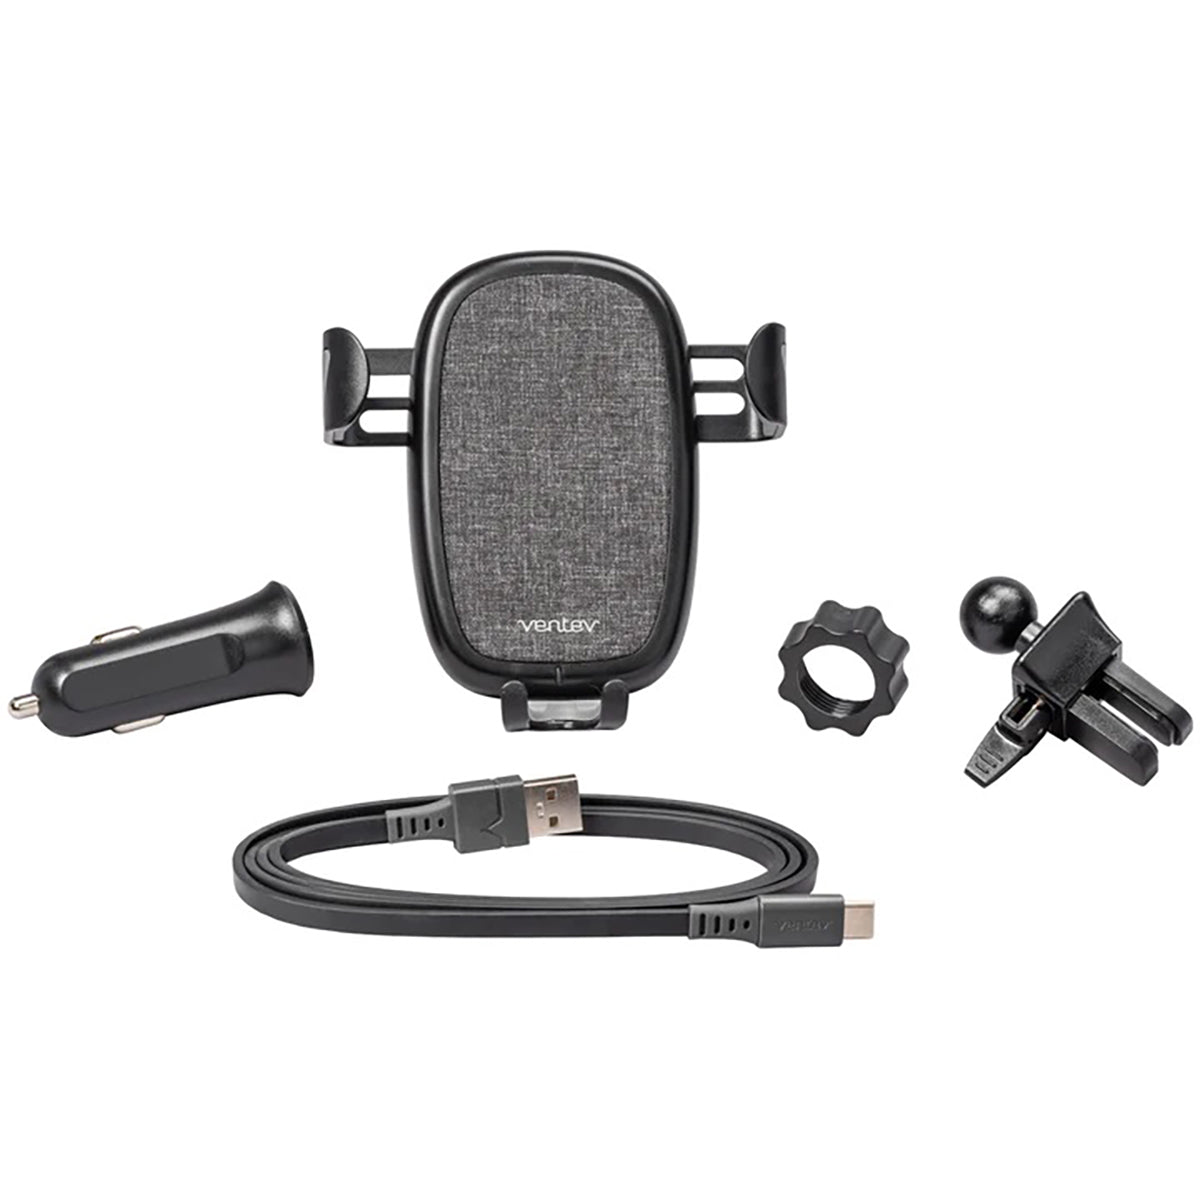 Ventev Wireless 15W Kit Carga Rápida para Automóvil - Ventev Wireless 15W Fast Car Charging Kit